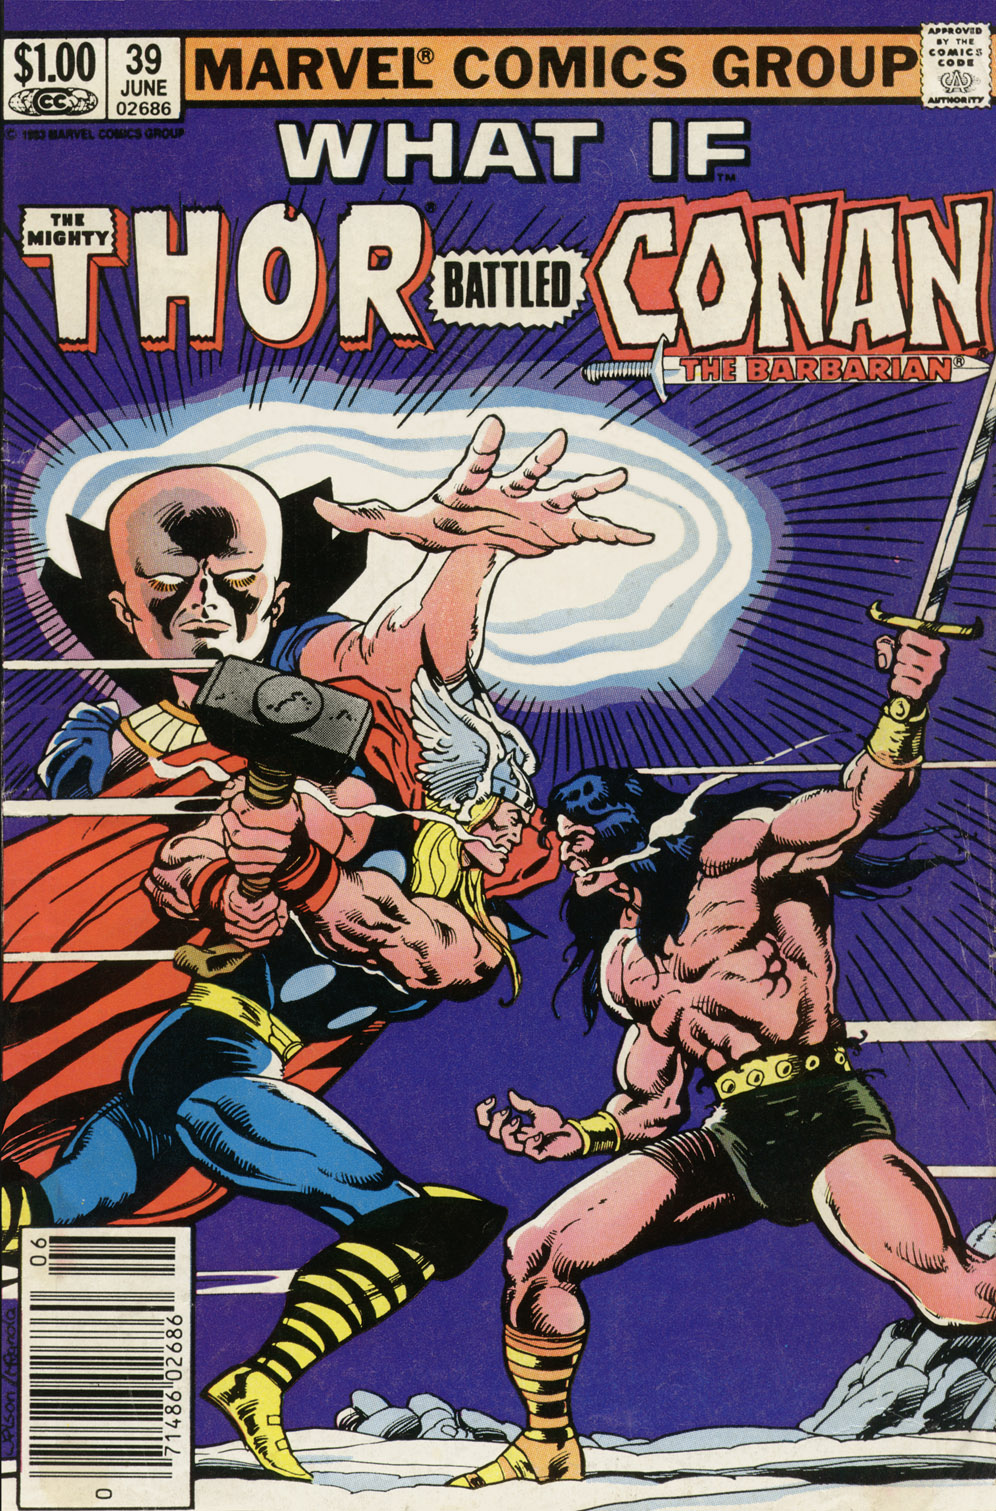 Thor battled conan